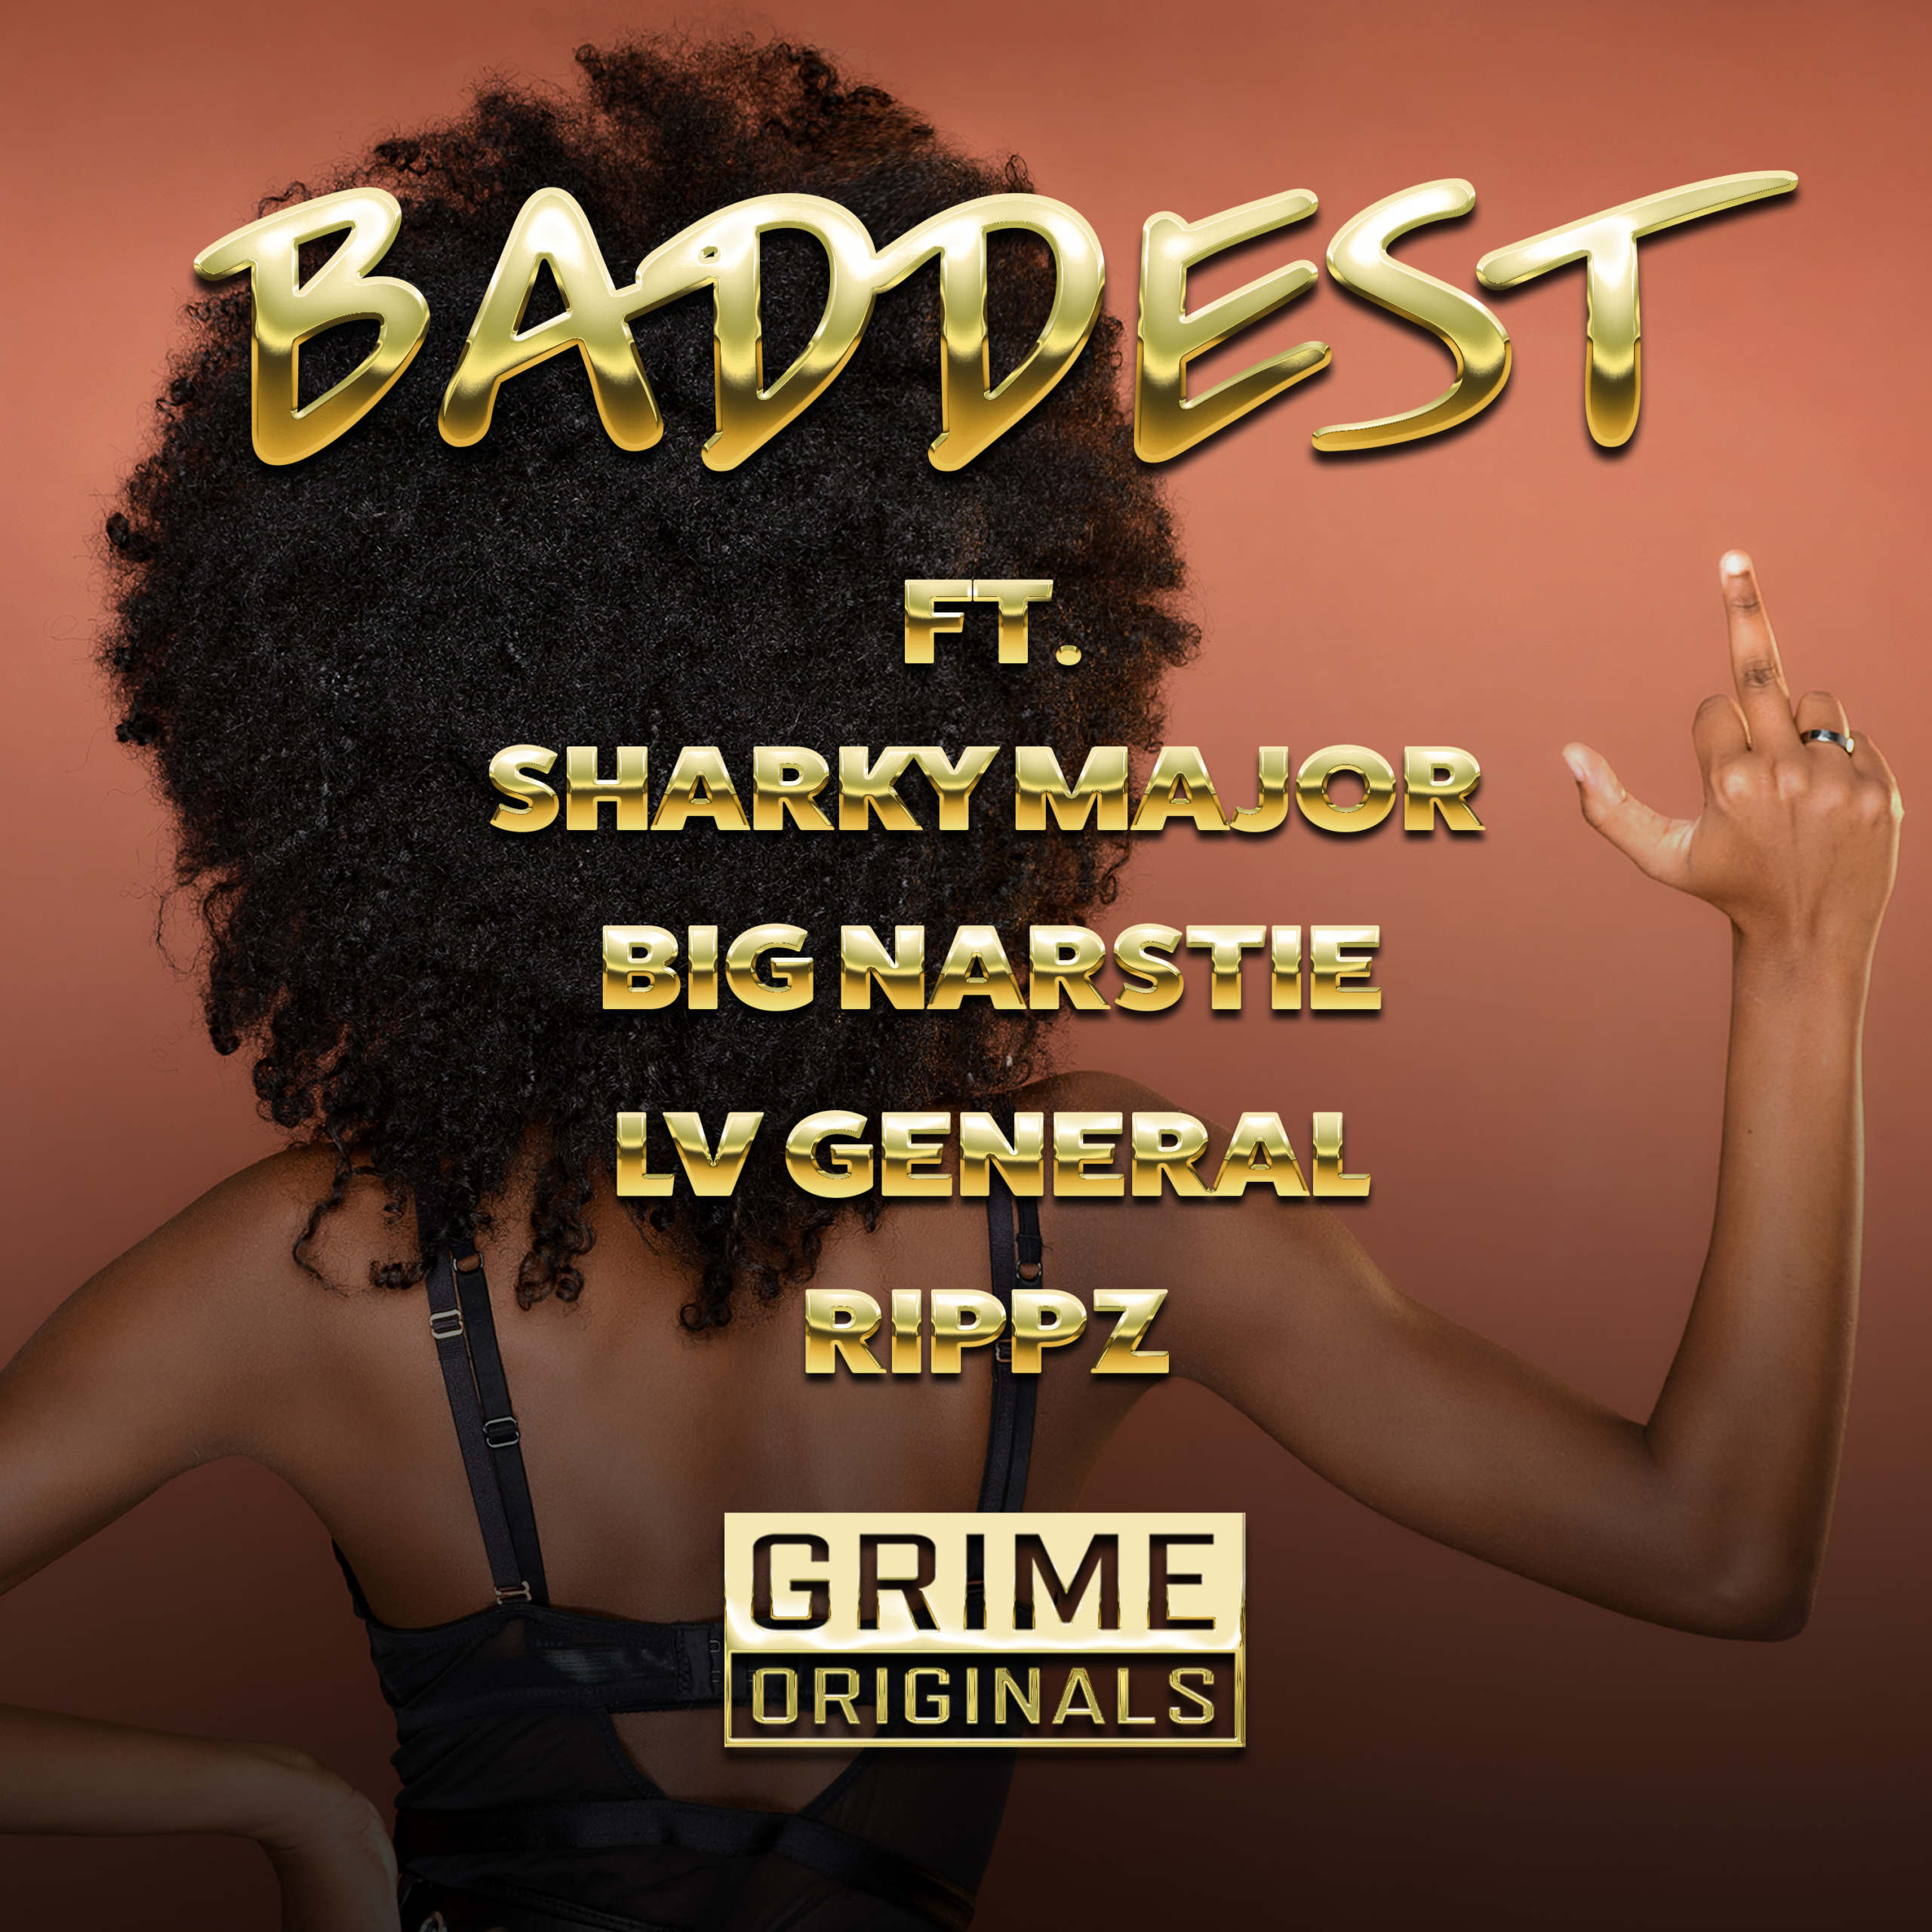 Grime Originals feat. Sharky Major, Big Narstie, LV General, & Rippz "Baddest" (Video)